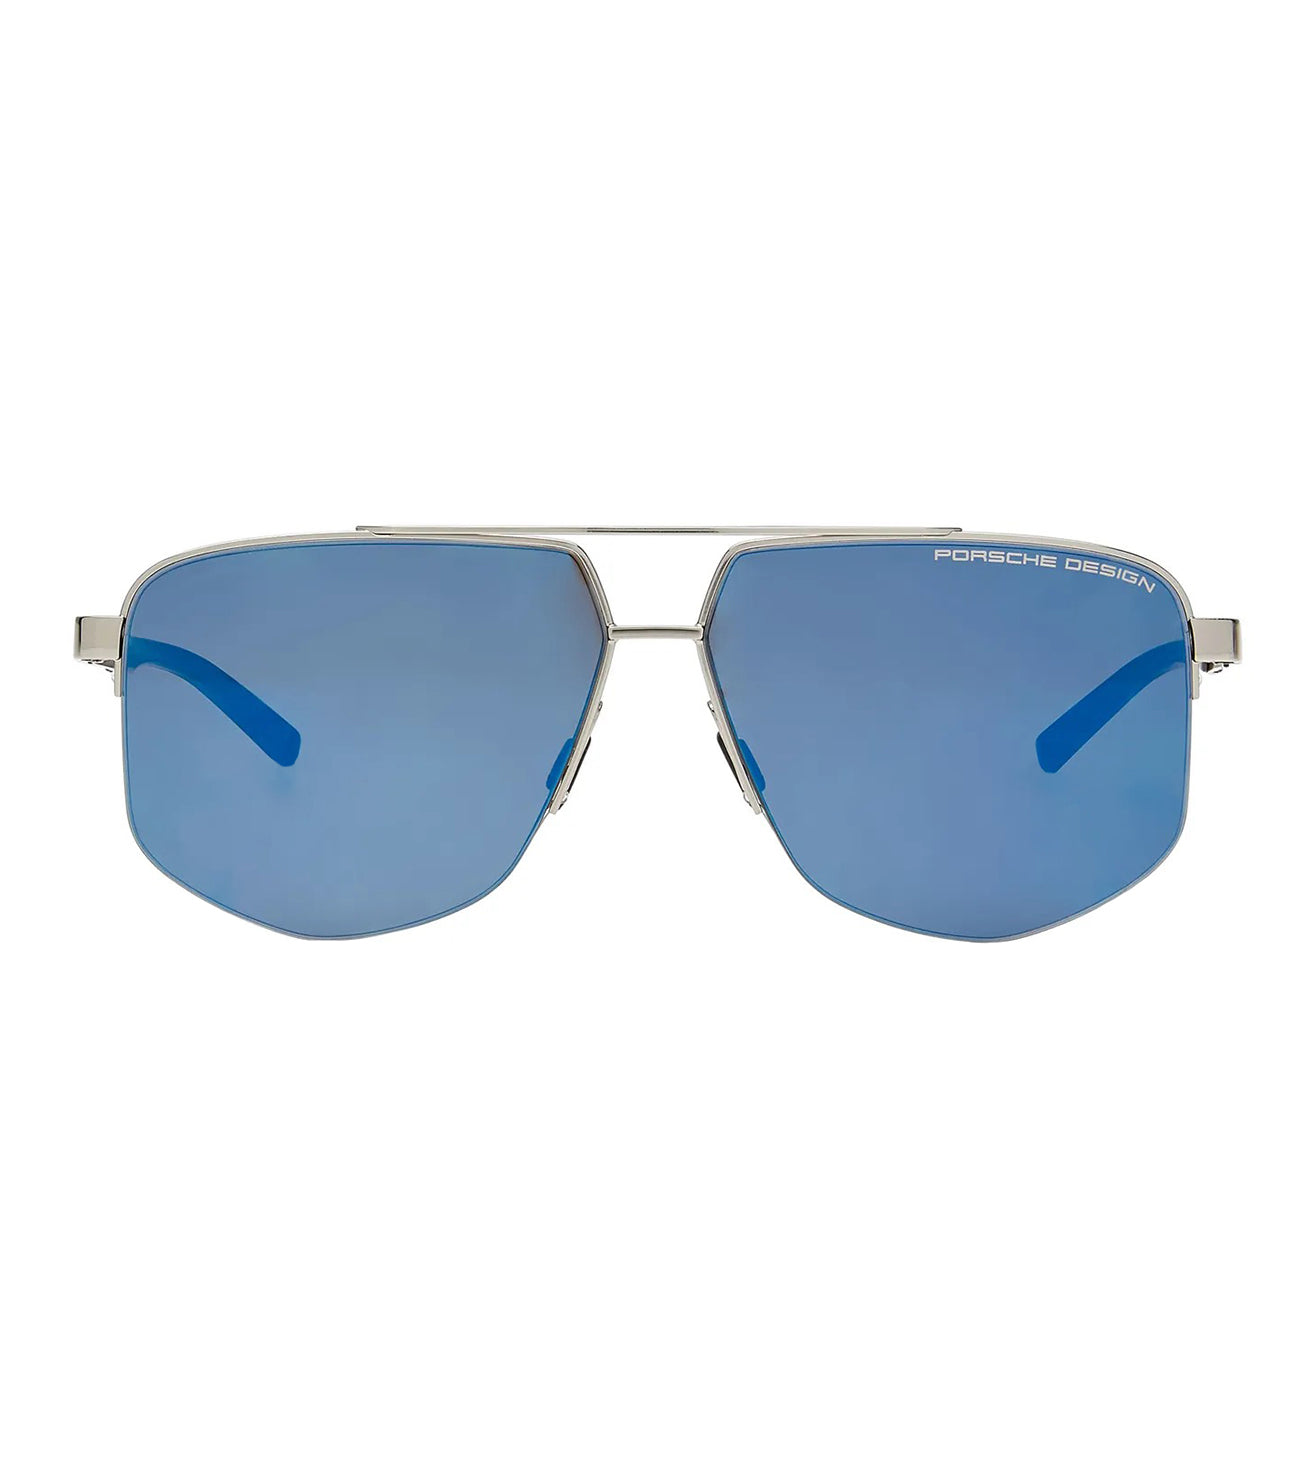 Porsche Design Men's Dark Blue-Mirrored Aviator Sunglasses